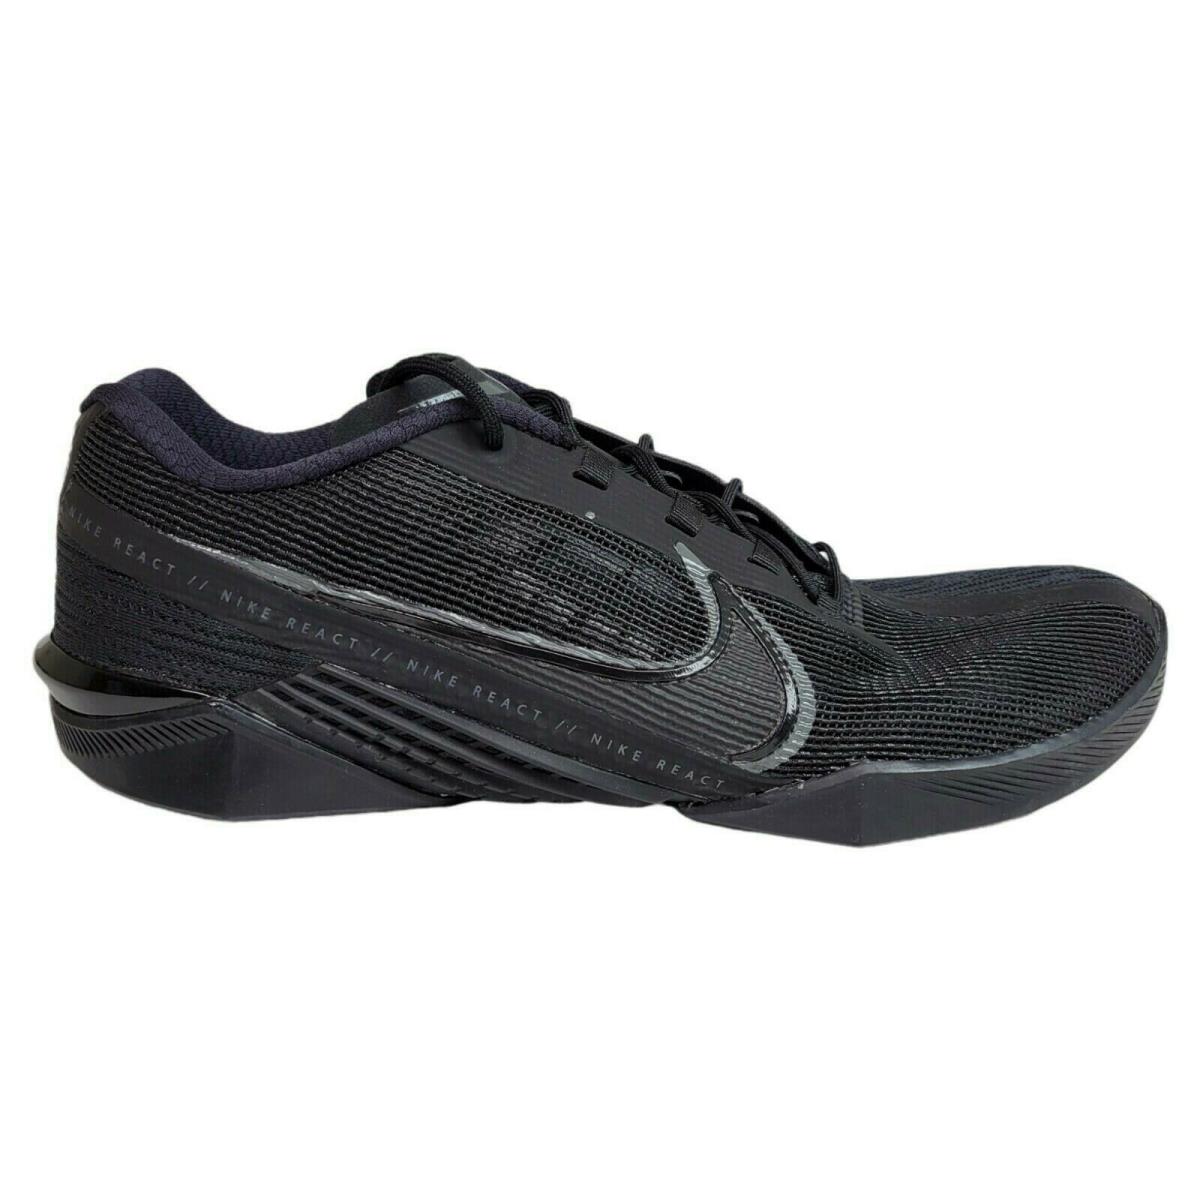 Nike Men 11 11.5 12.5 React Metcon Turbo Black Training Crossfit Shoe CT1243-002 - Black